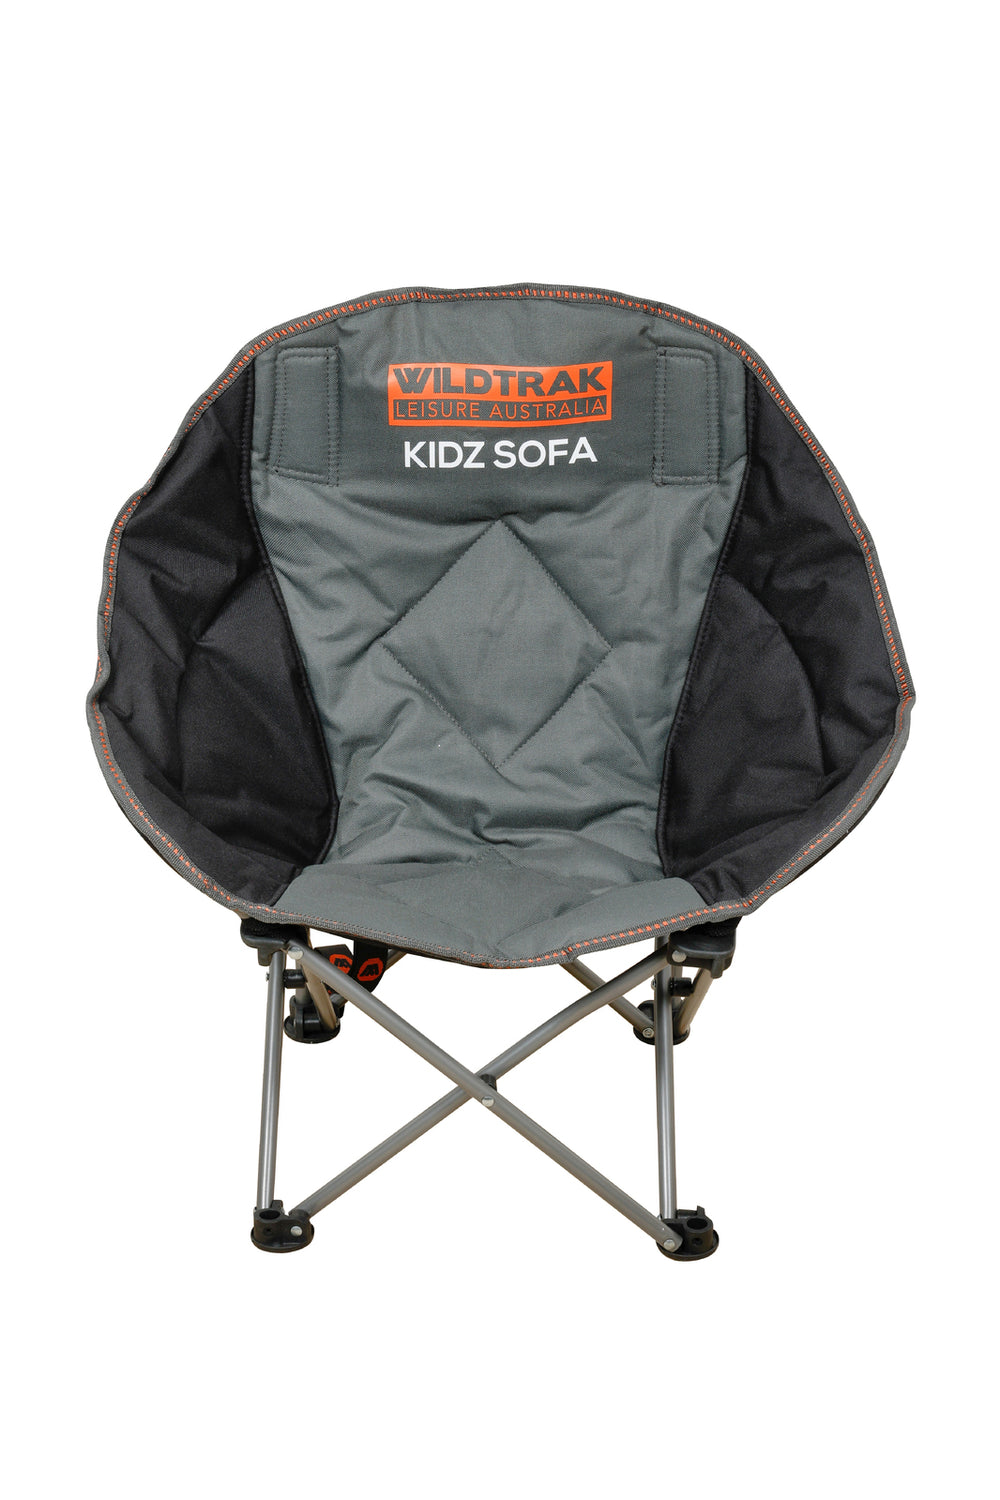 Wildtrak Kidz 62x35cm Camping Sofa Chair Seat - Grey/Black